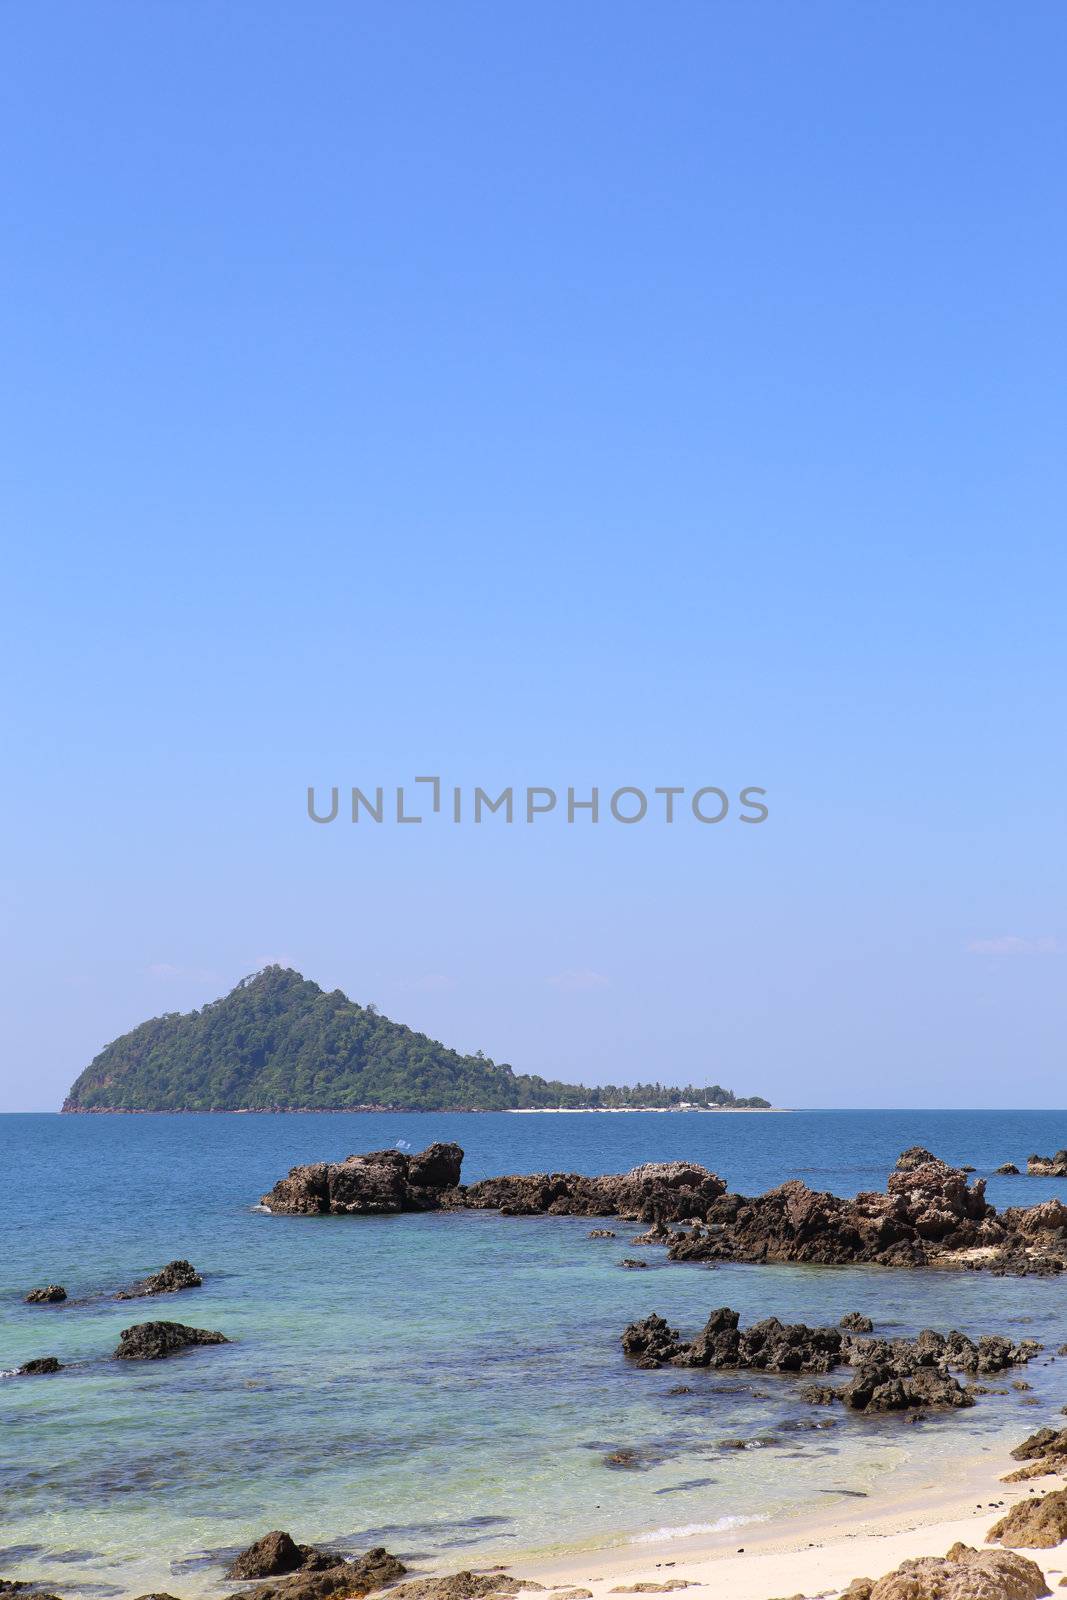 beach with rocks and blue sky,Thailand